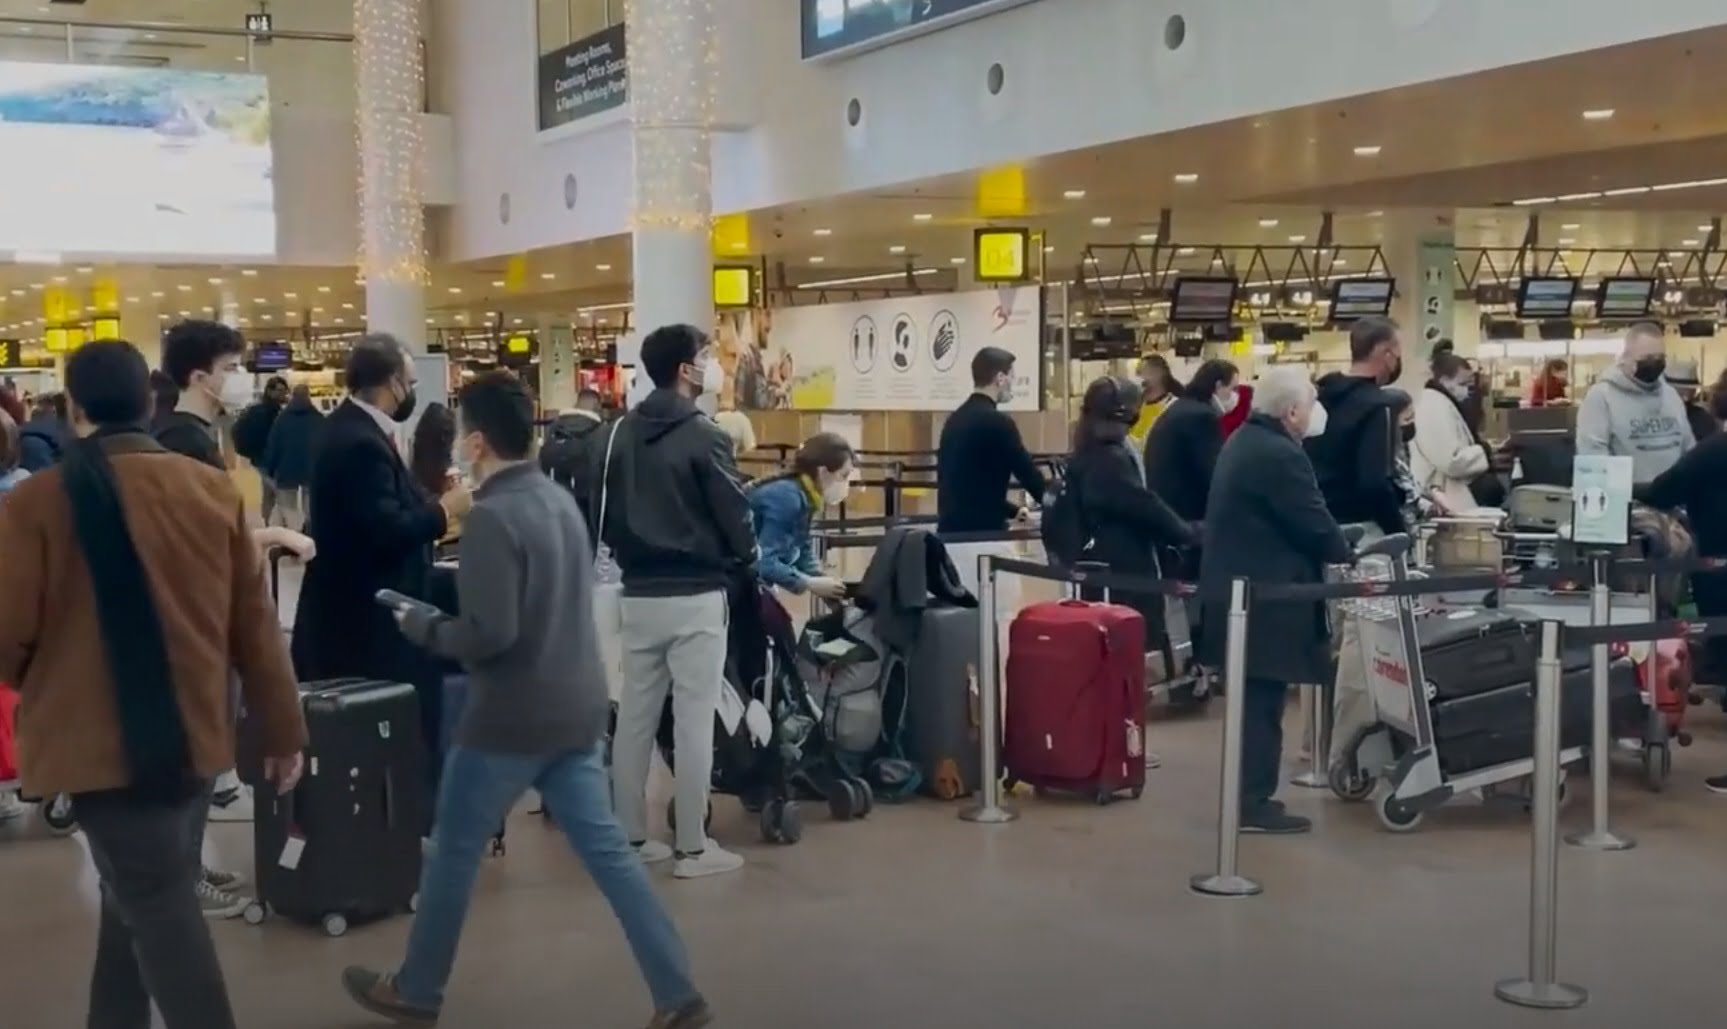 Spontaneous strike at the baggage handler at Zaventem airport